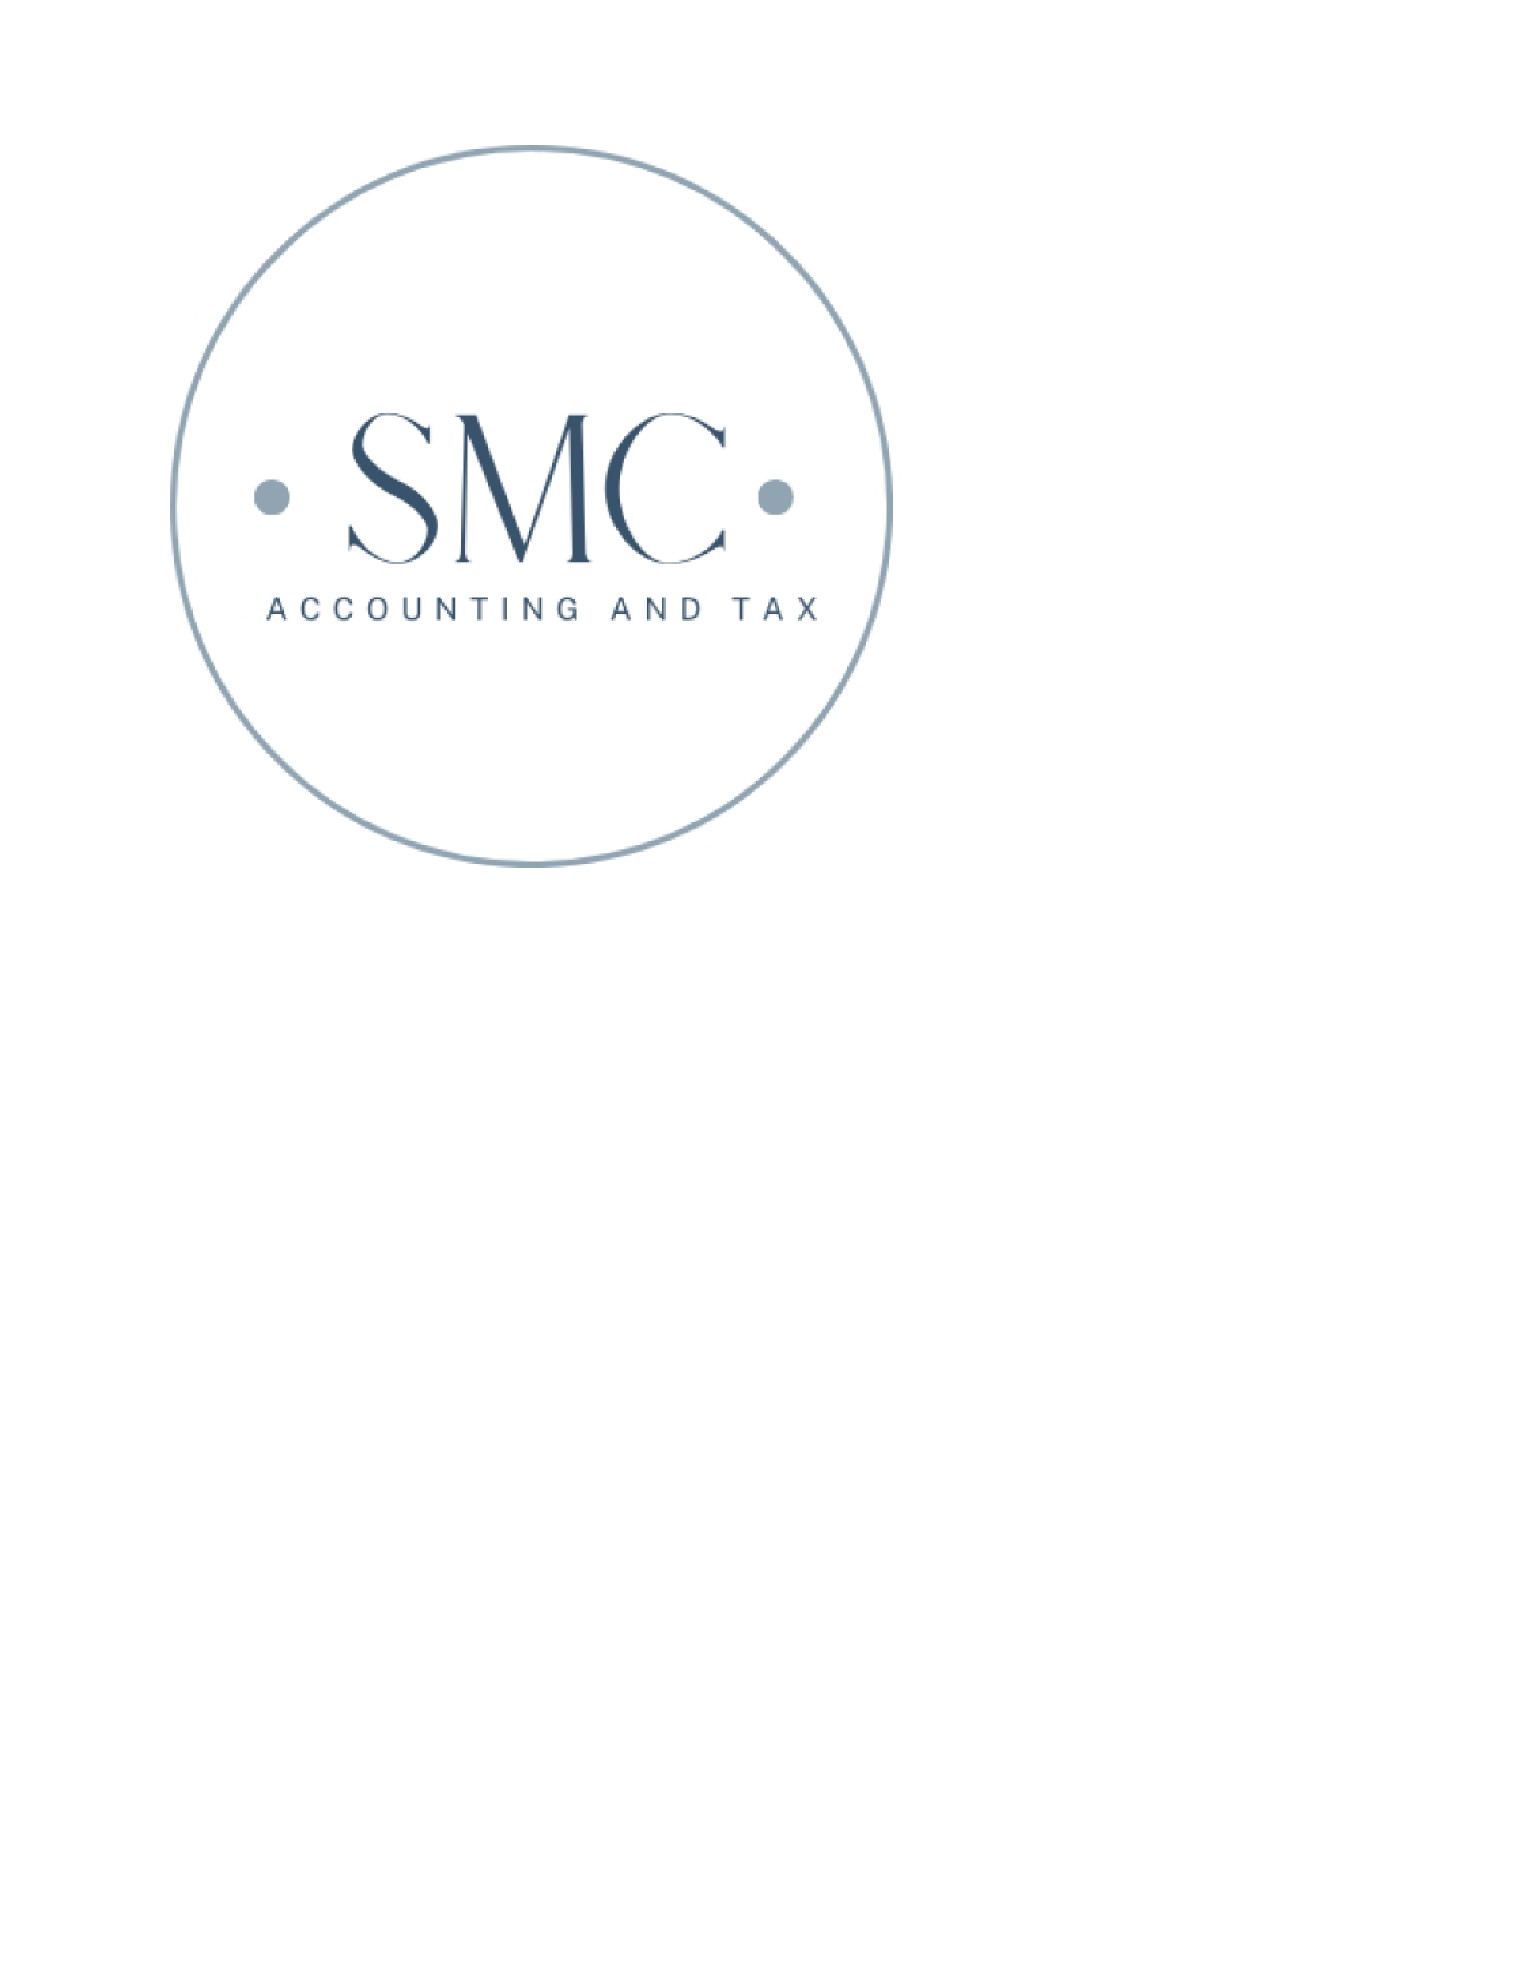 SMC Accounting & Tax Services, LLC